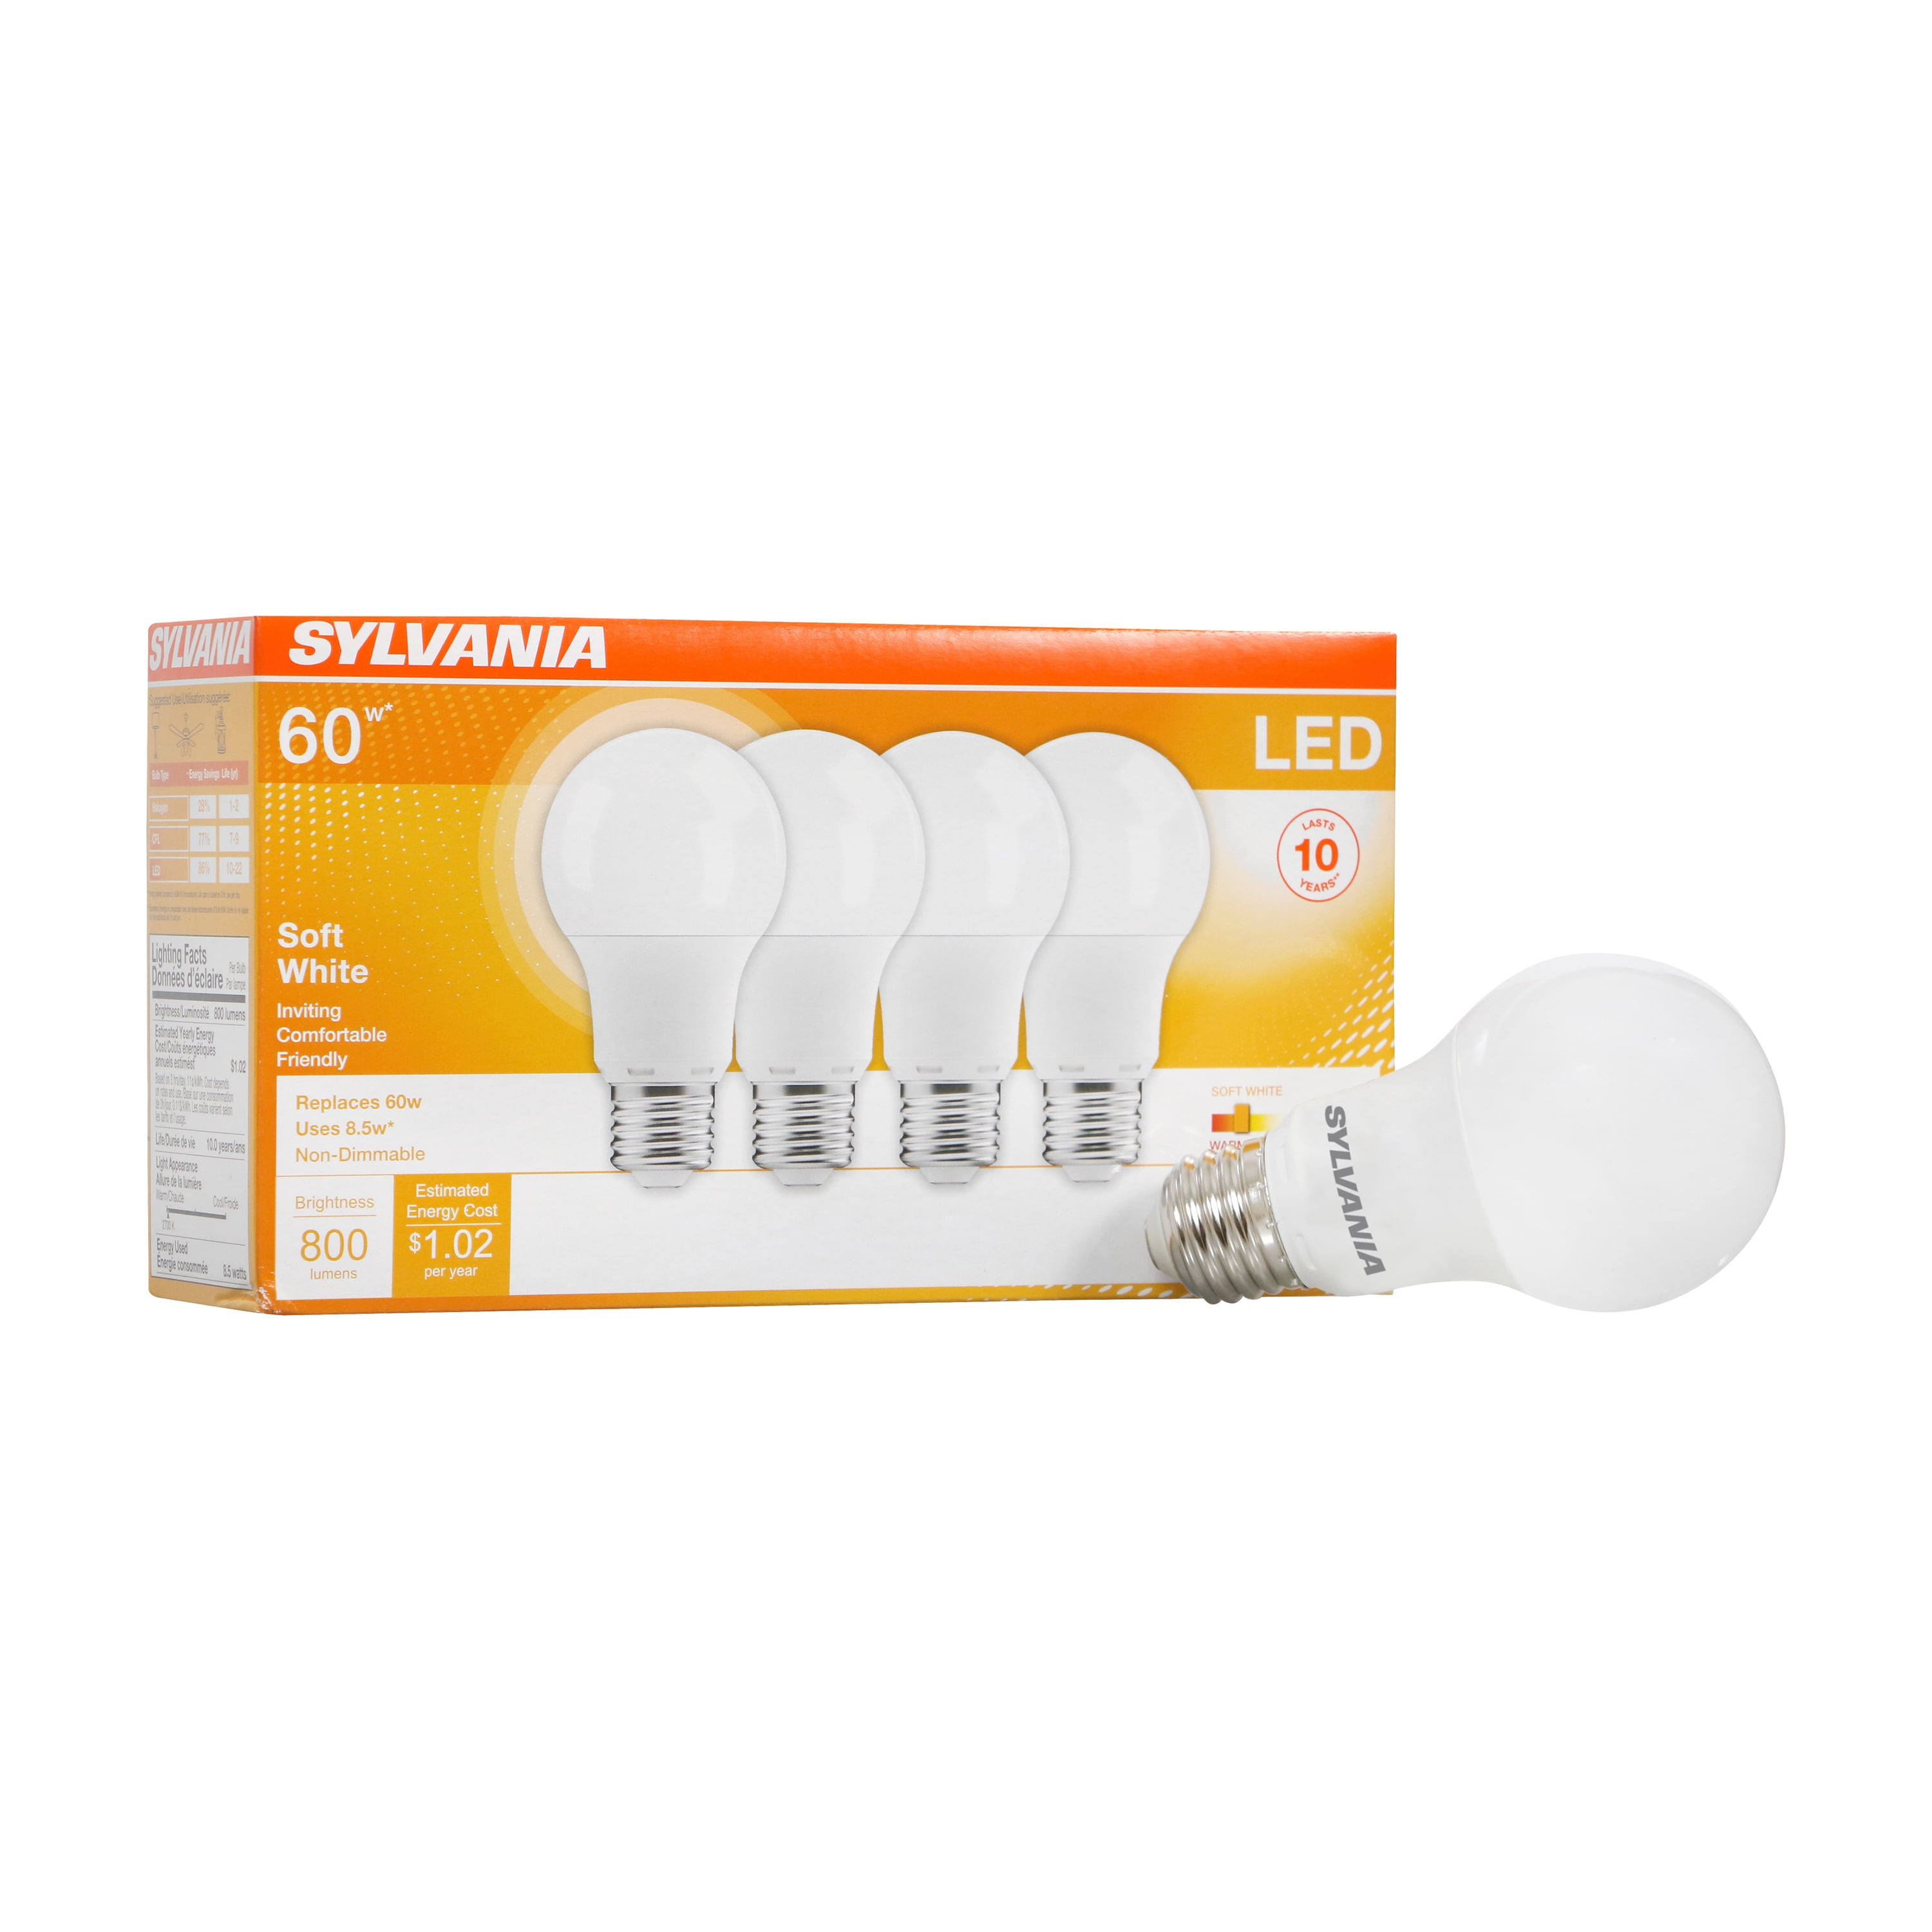 SYLVANIA LED A19 Light Bulb, 60W Equivalent, Medium Base, 2700K Soft ...